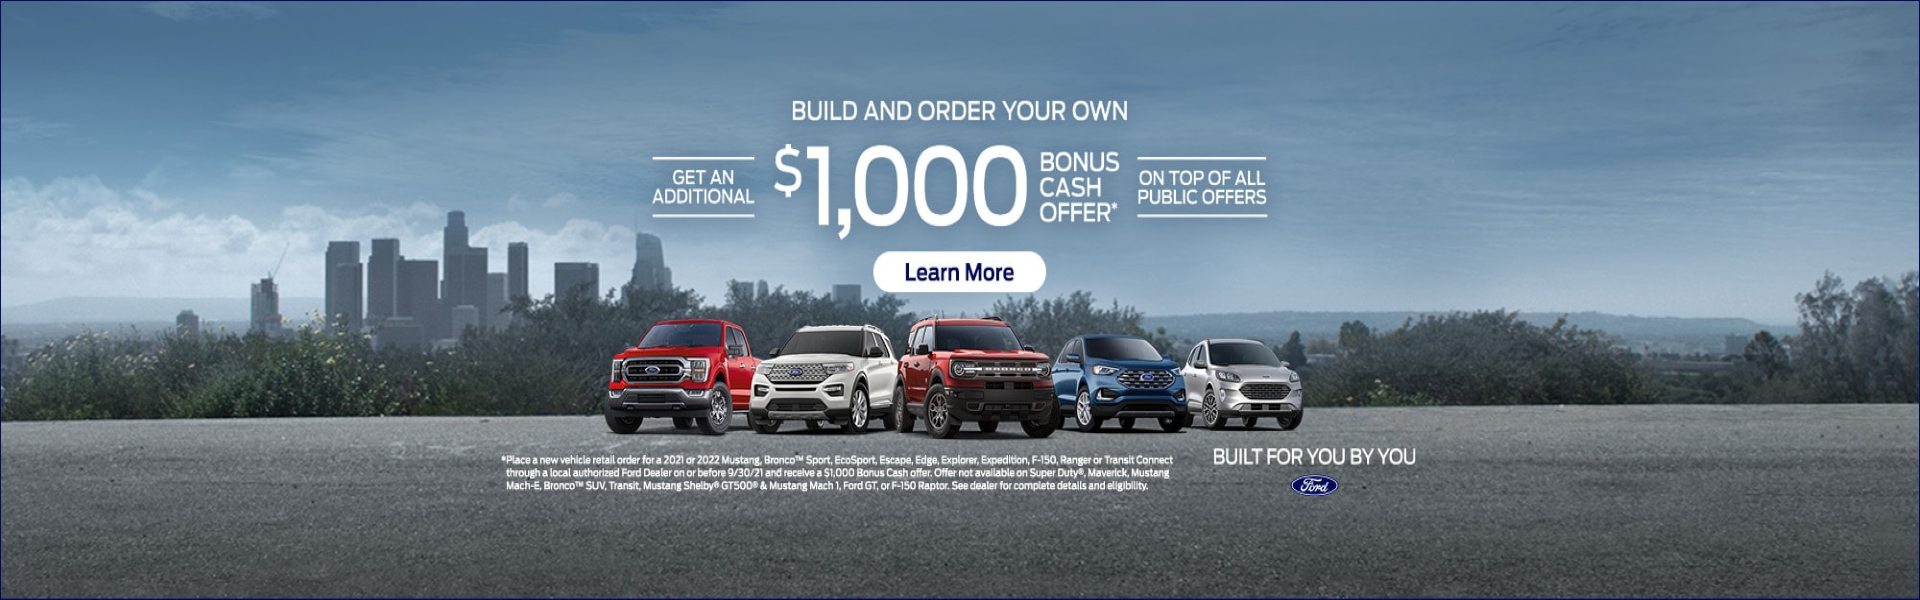 Ford $1000 custom order bonus cash